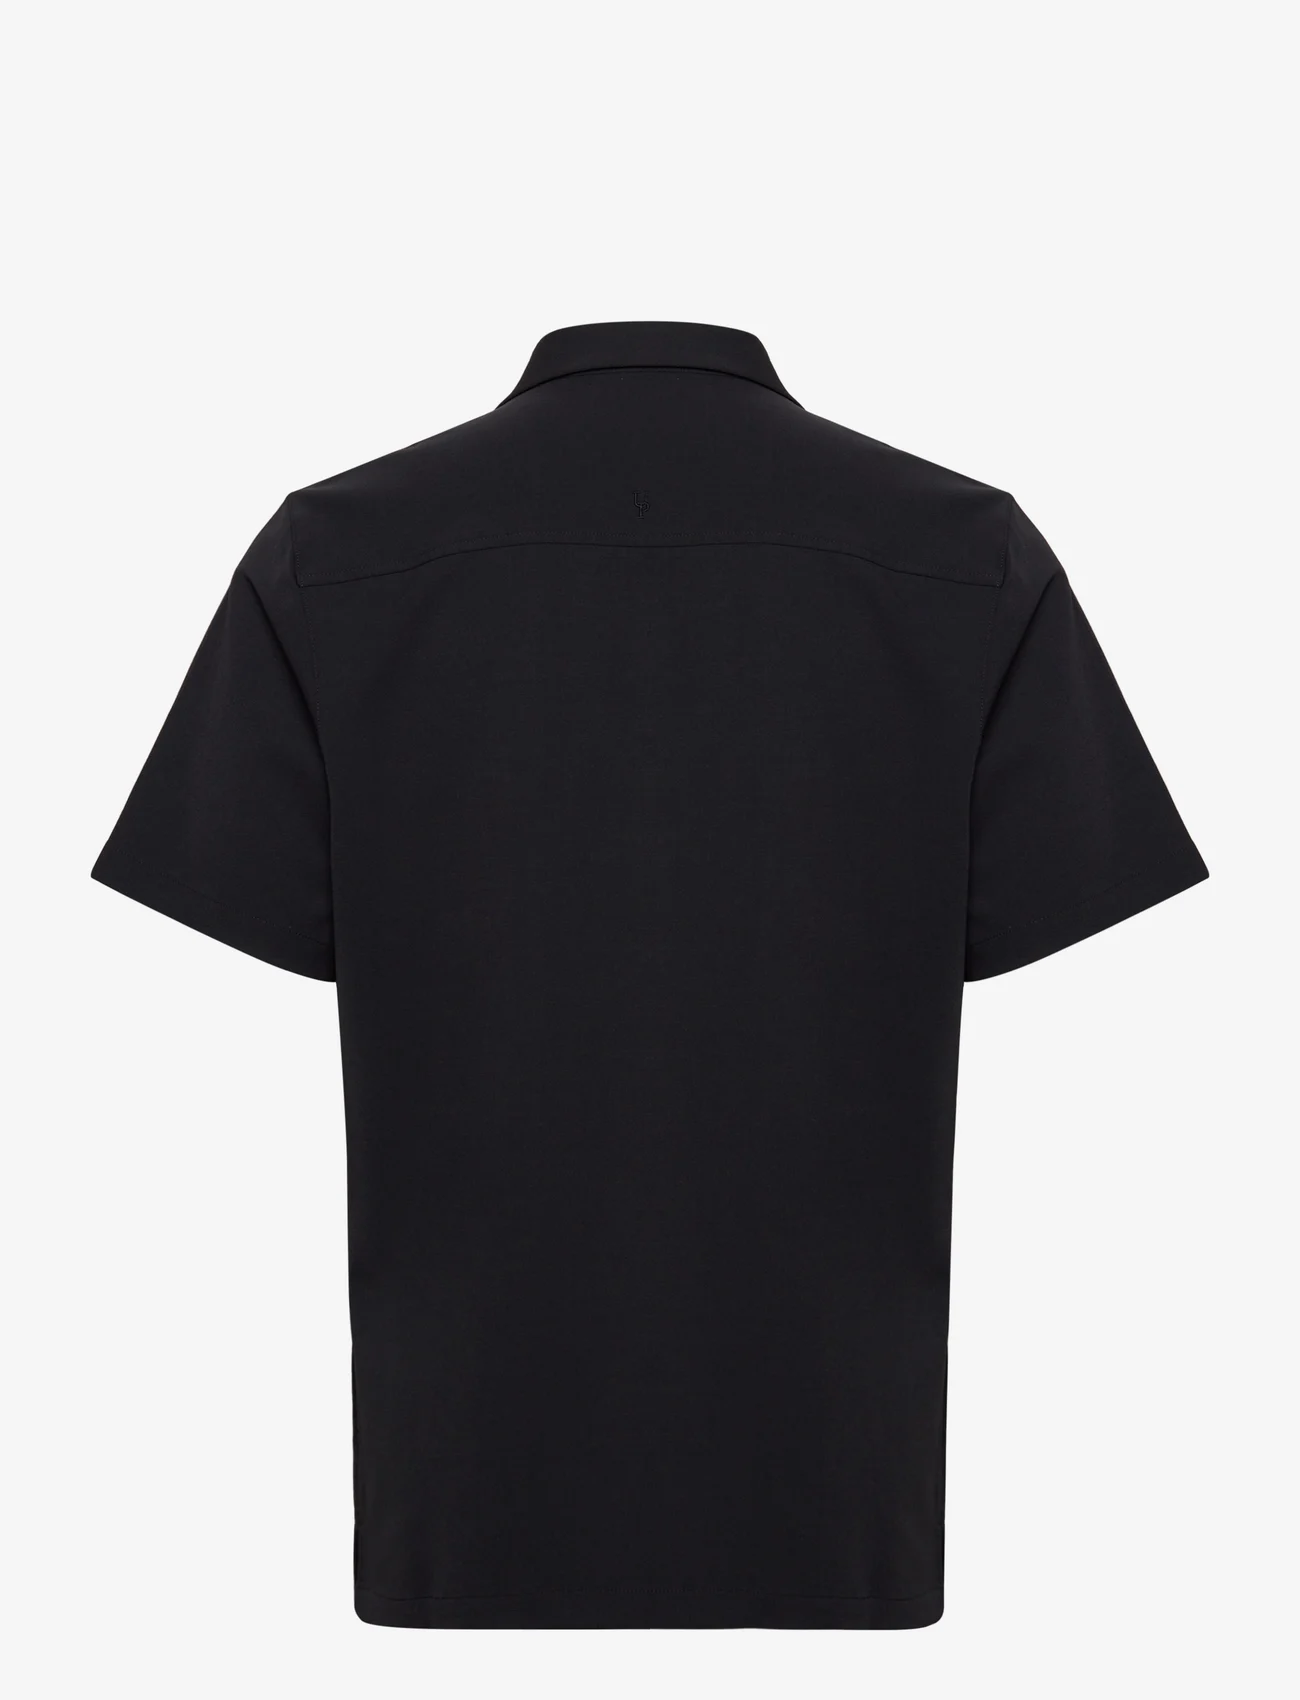 Urban Pioneers - Sheen Shirt - basic skjorter - dark navy - 1